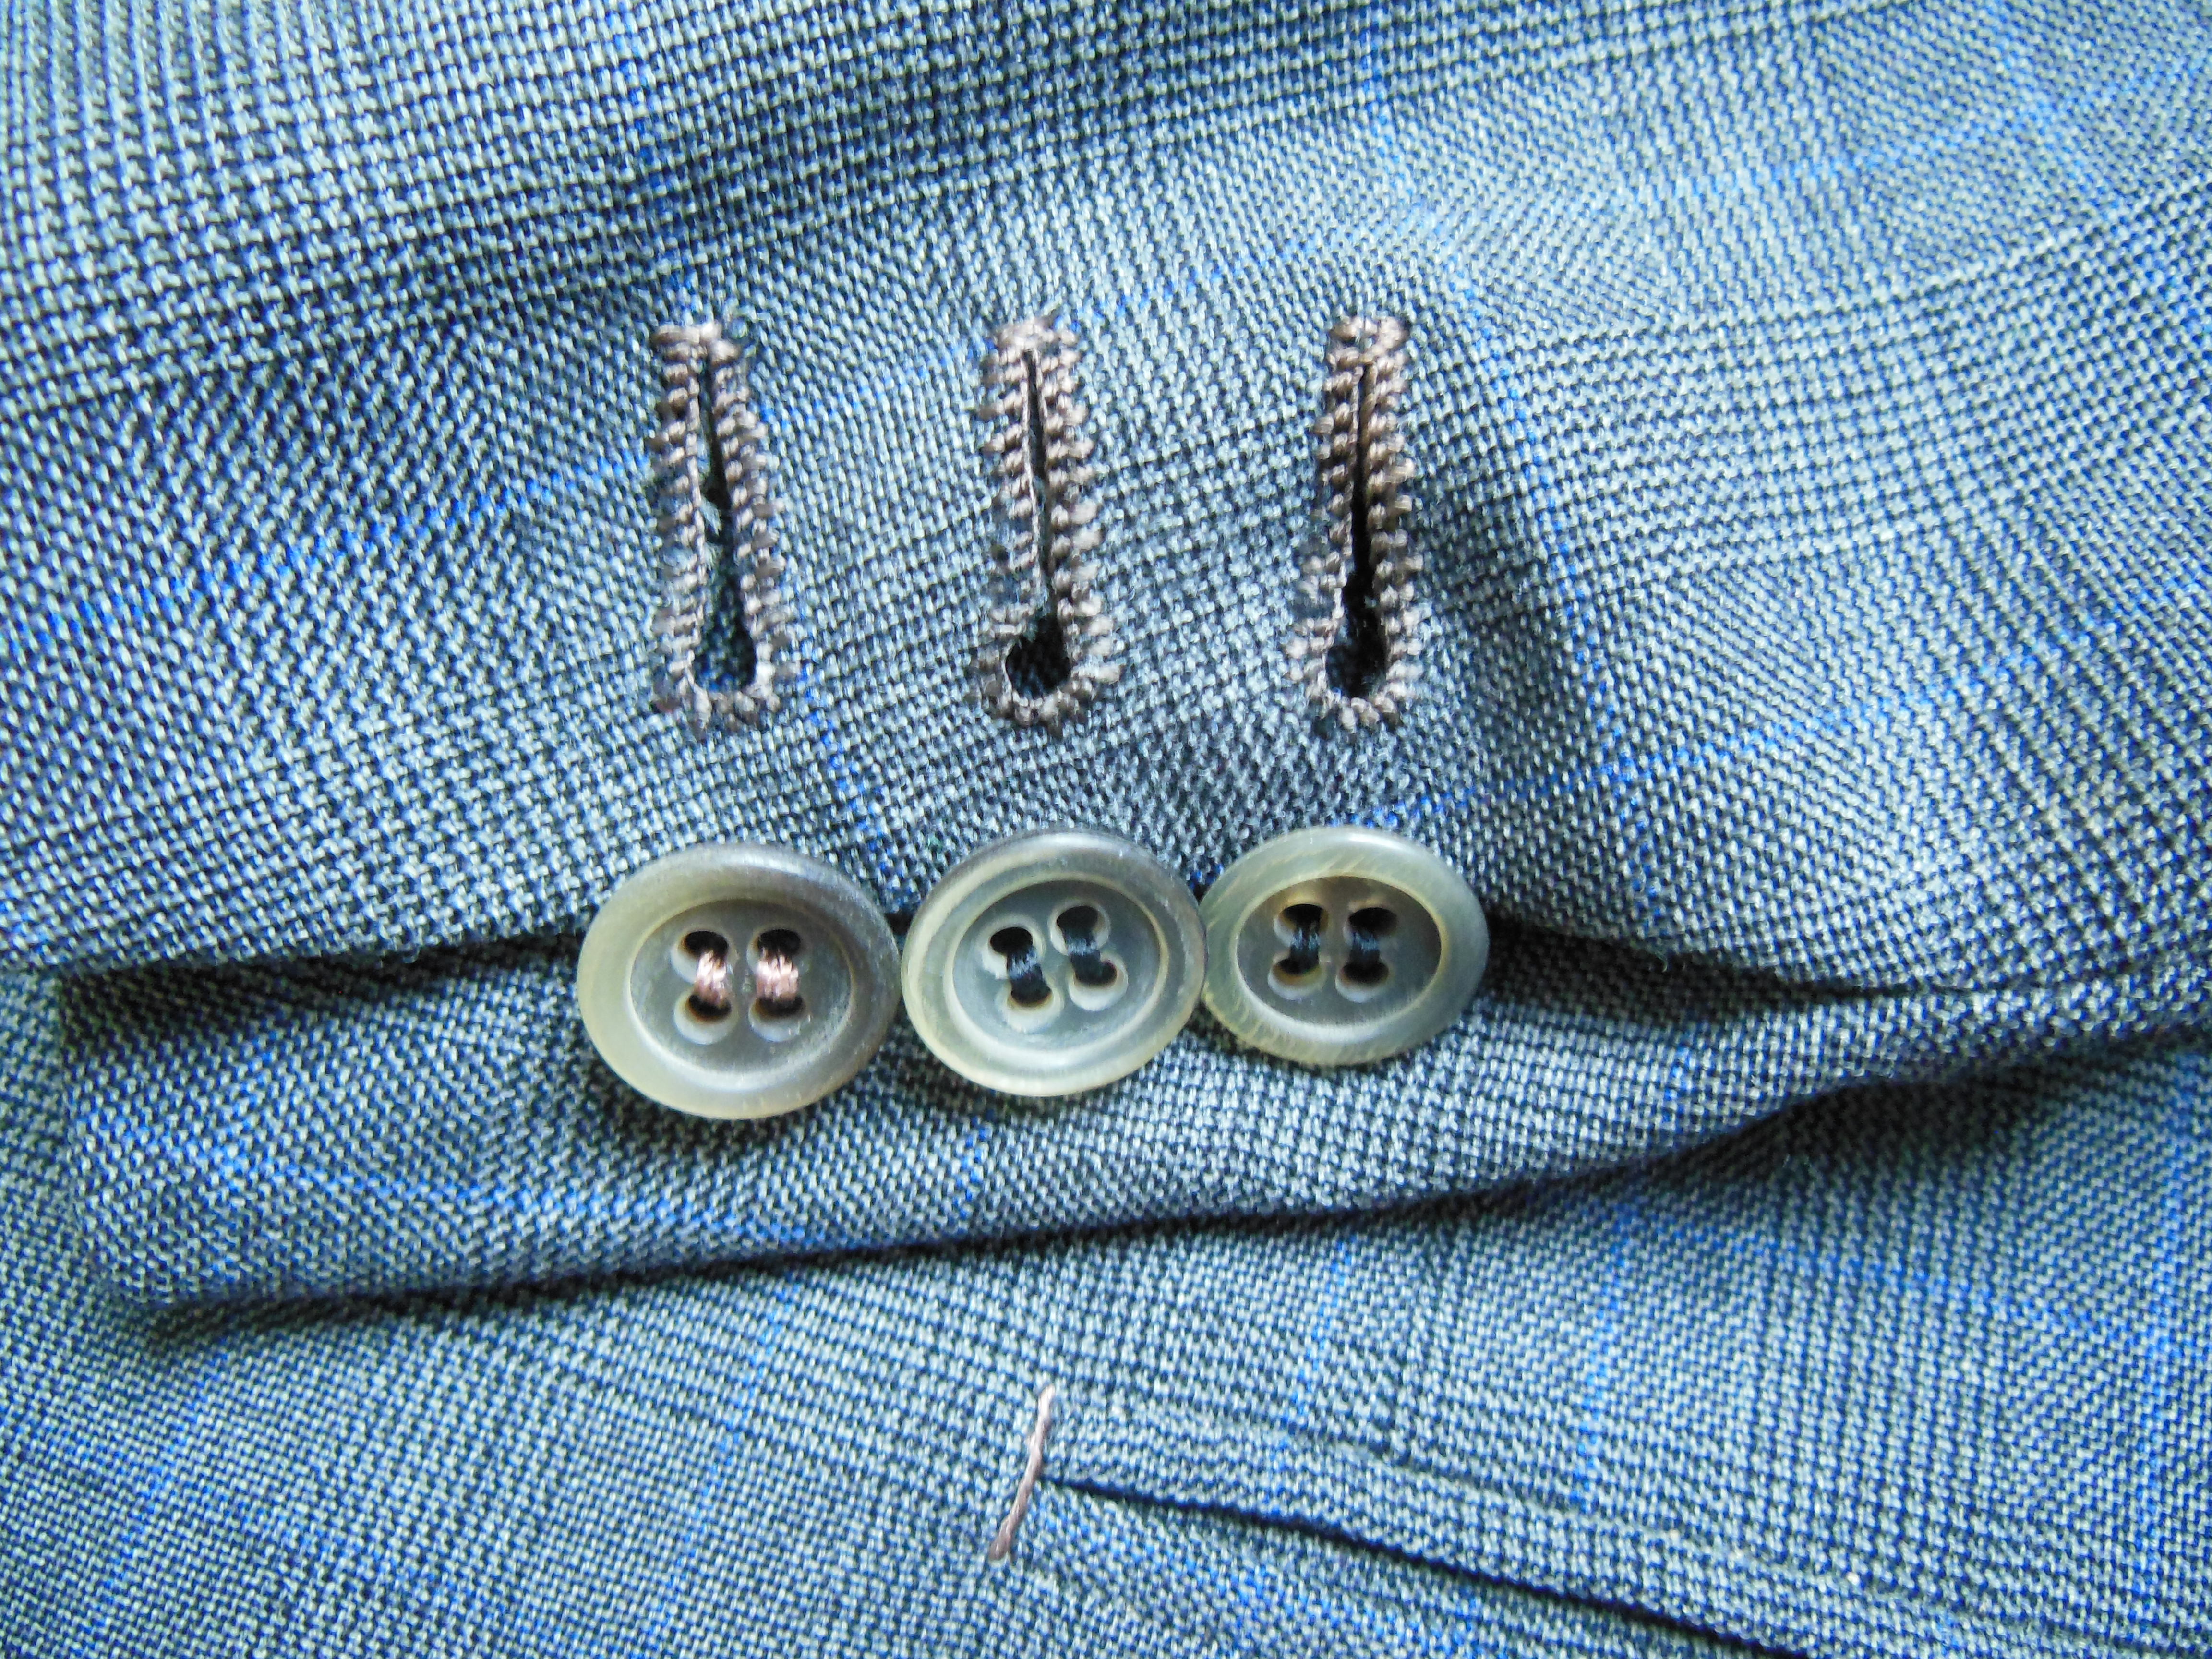 www.theGenuineGentleman.com suit working cuff buttons